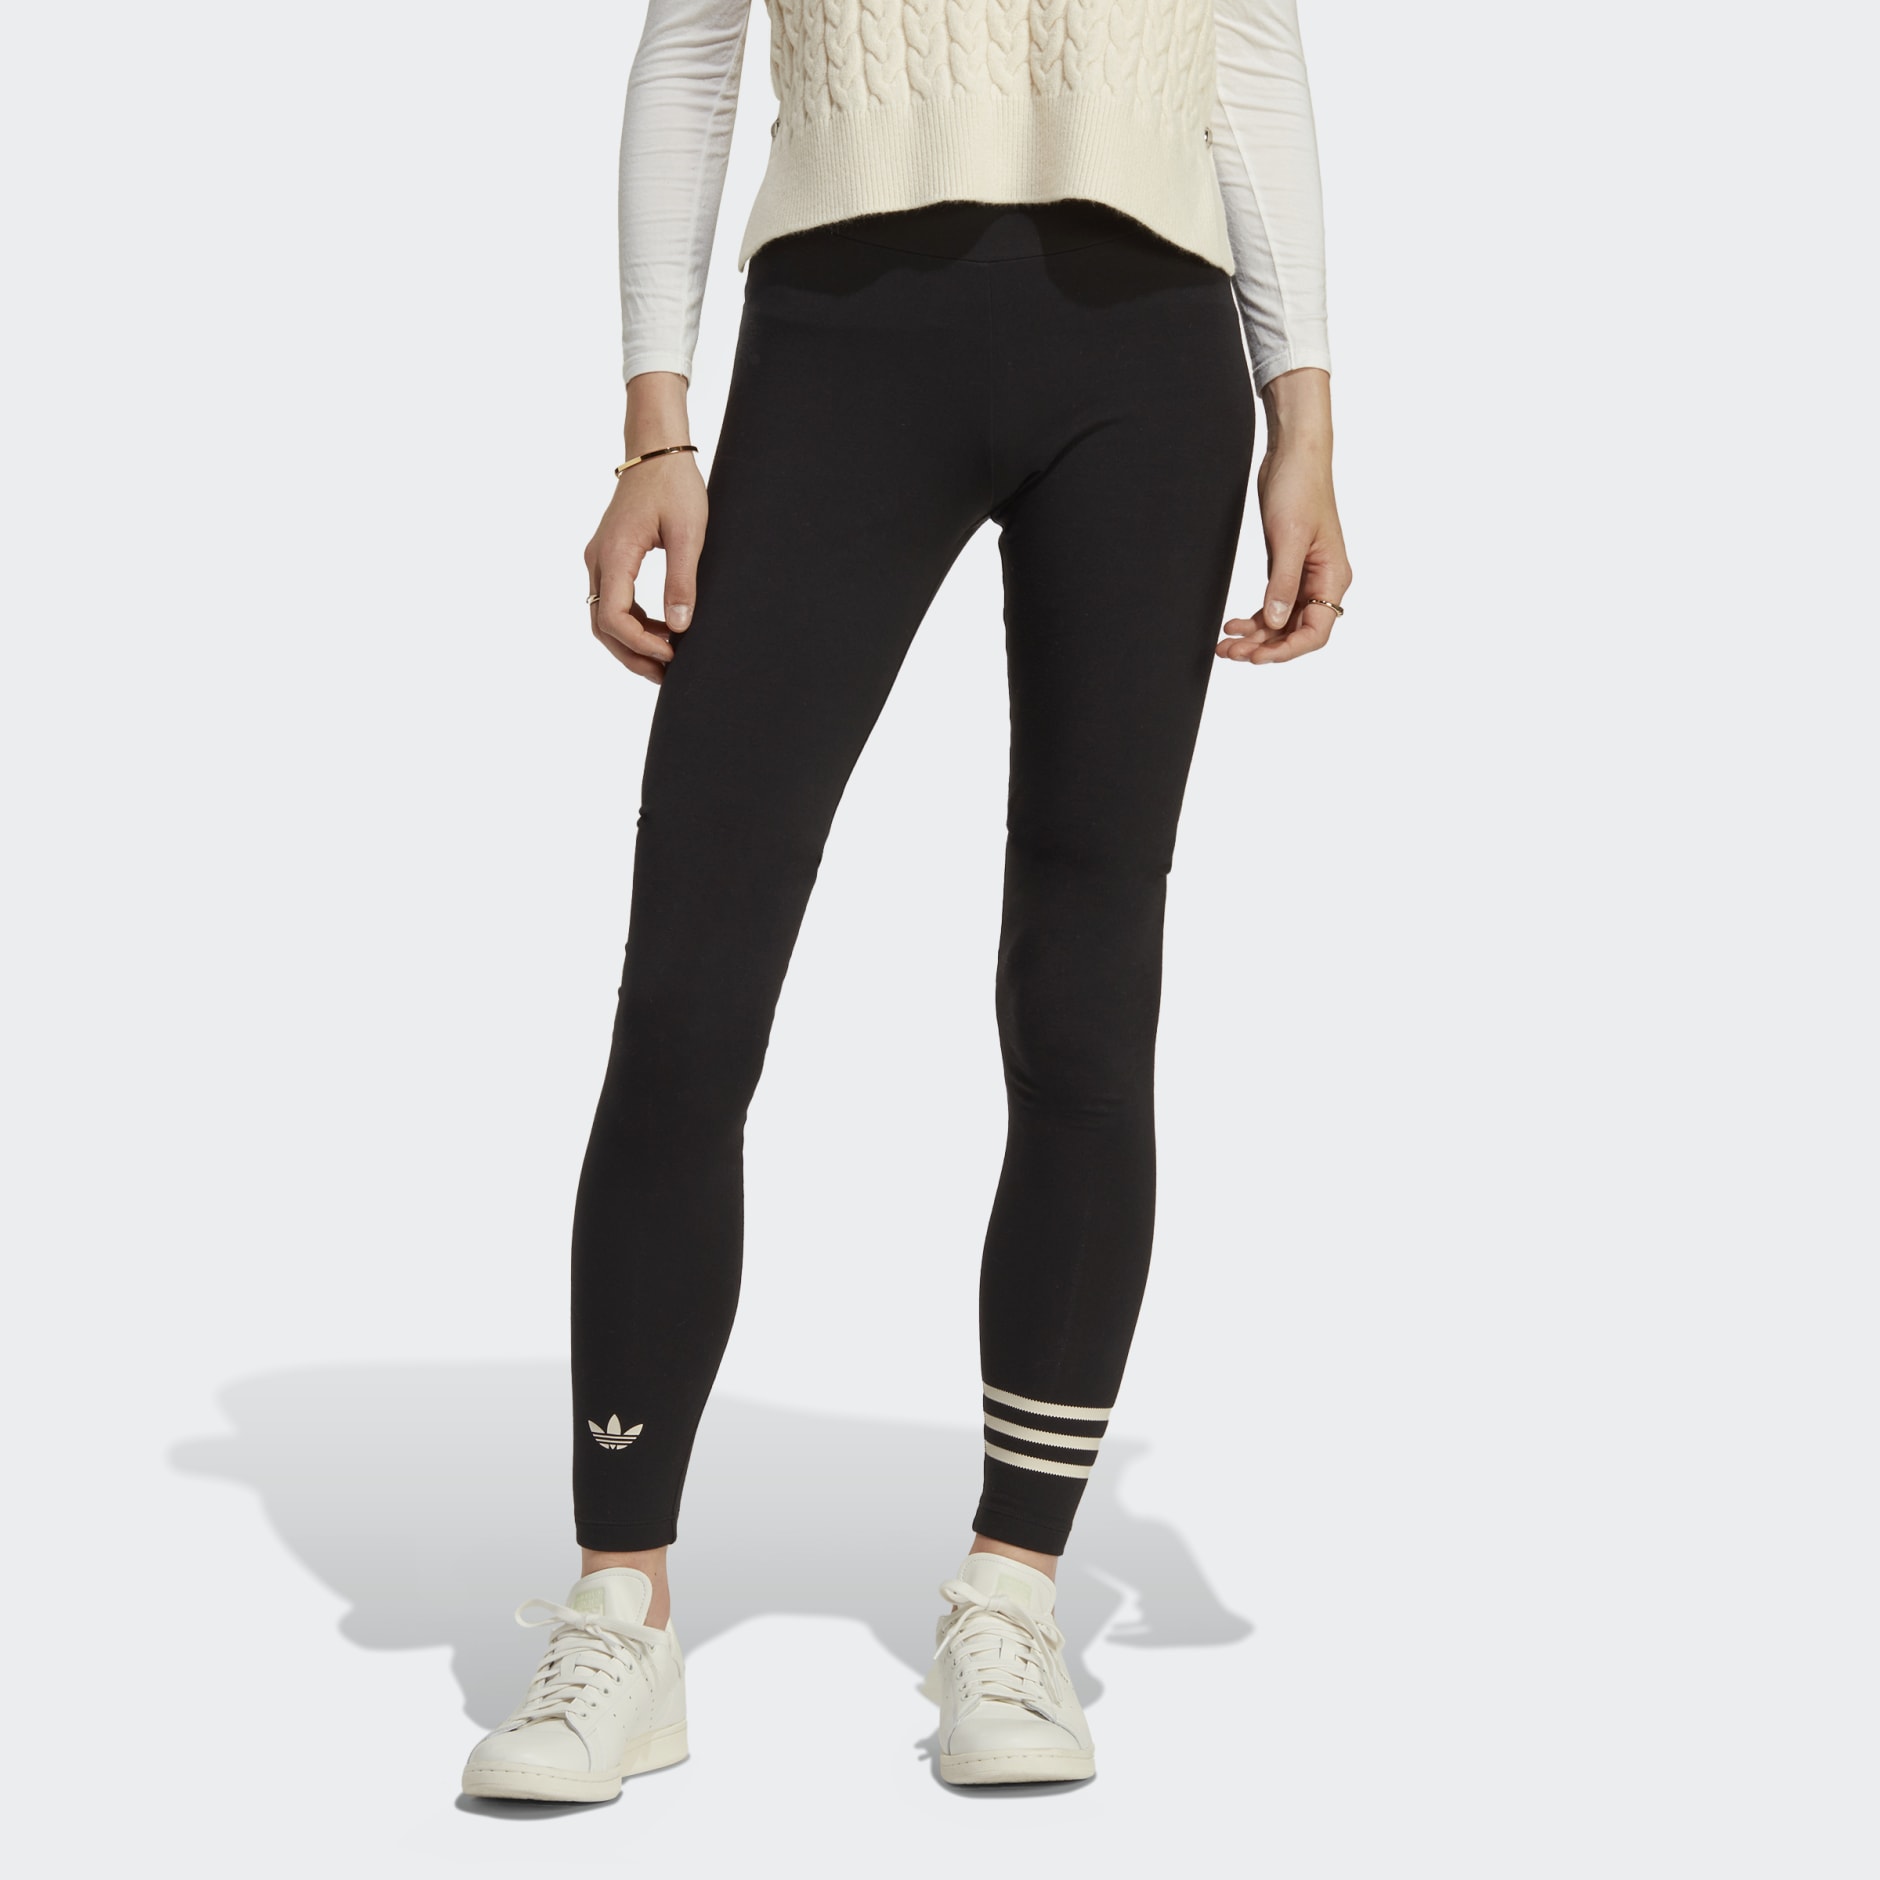 Adidas Women's Trefoil Tights (Black, Size XS), Women's